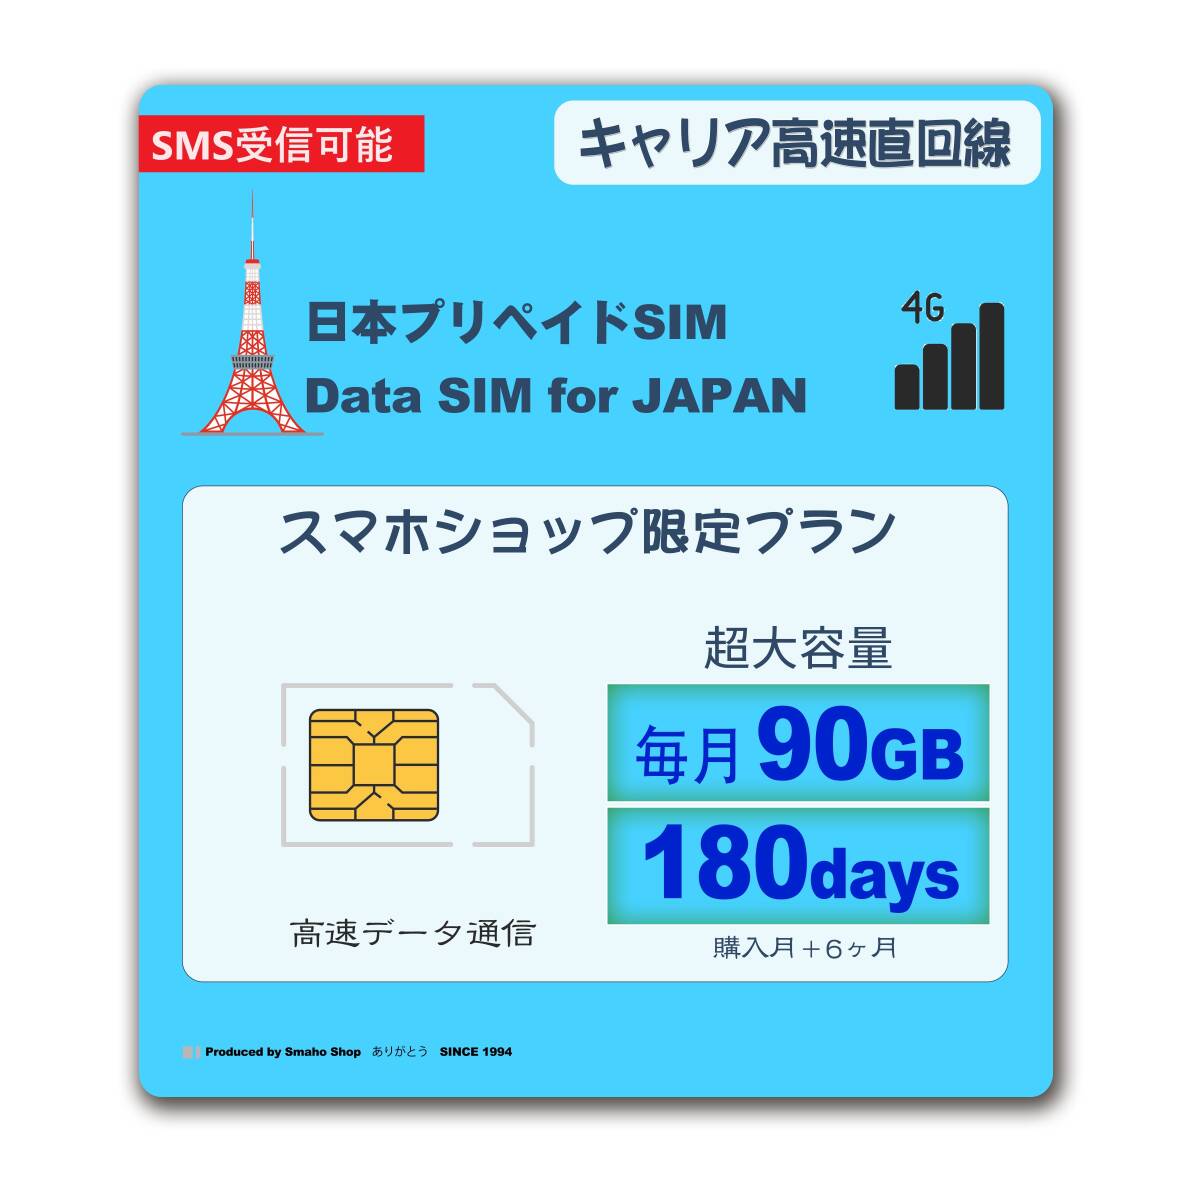 ★SMS受信OK 超大容量高速【 毎月90GB （初月無料+6ヶ月）（合計 630GB）】日本国内データ通信SIMカードJAPAN prepaid DATA SIM★送料無料_画像1